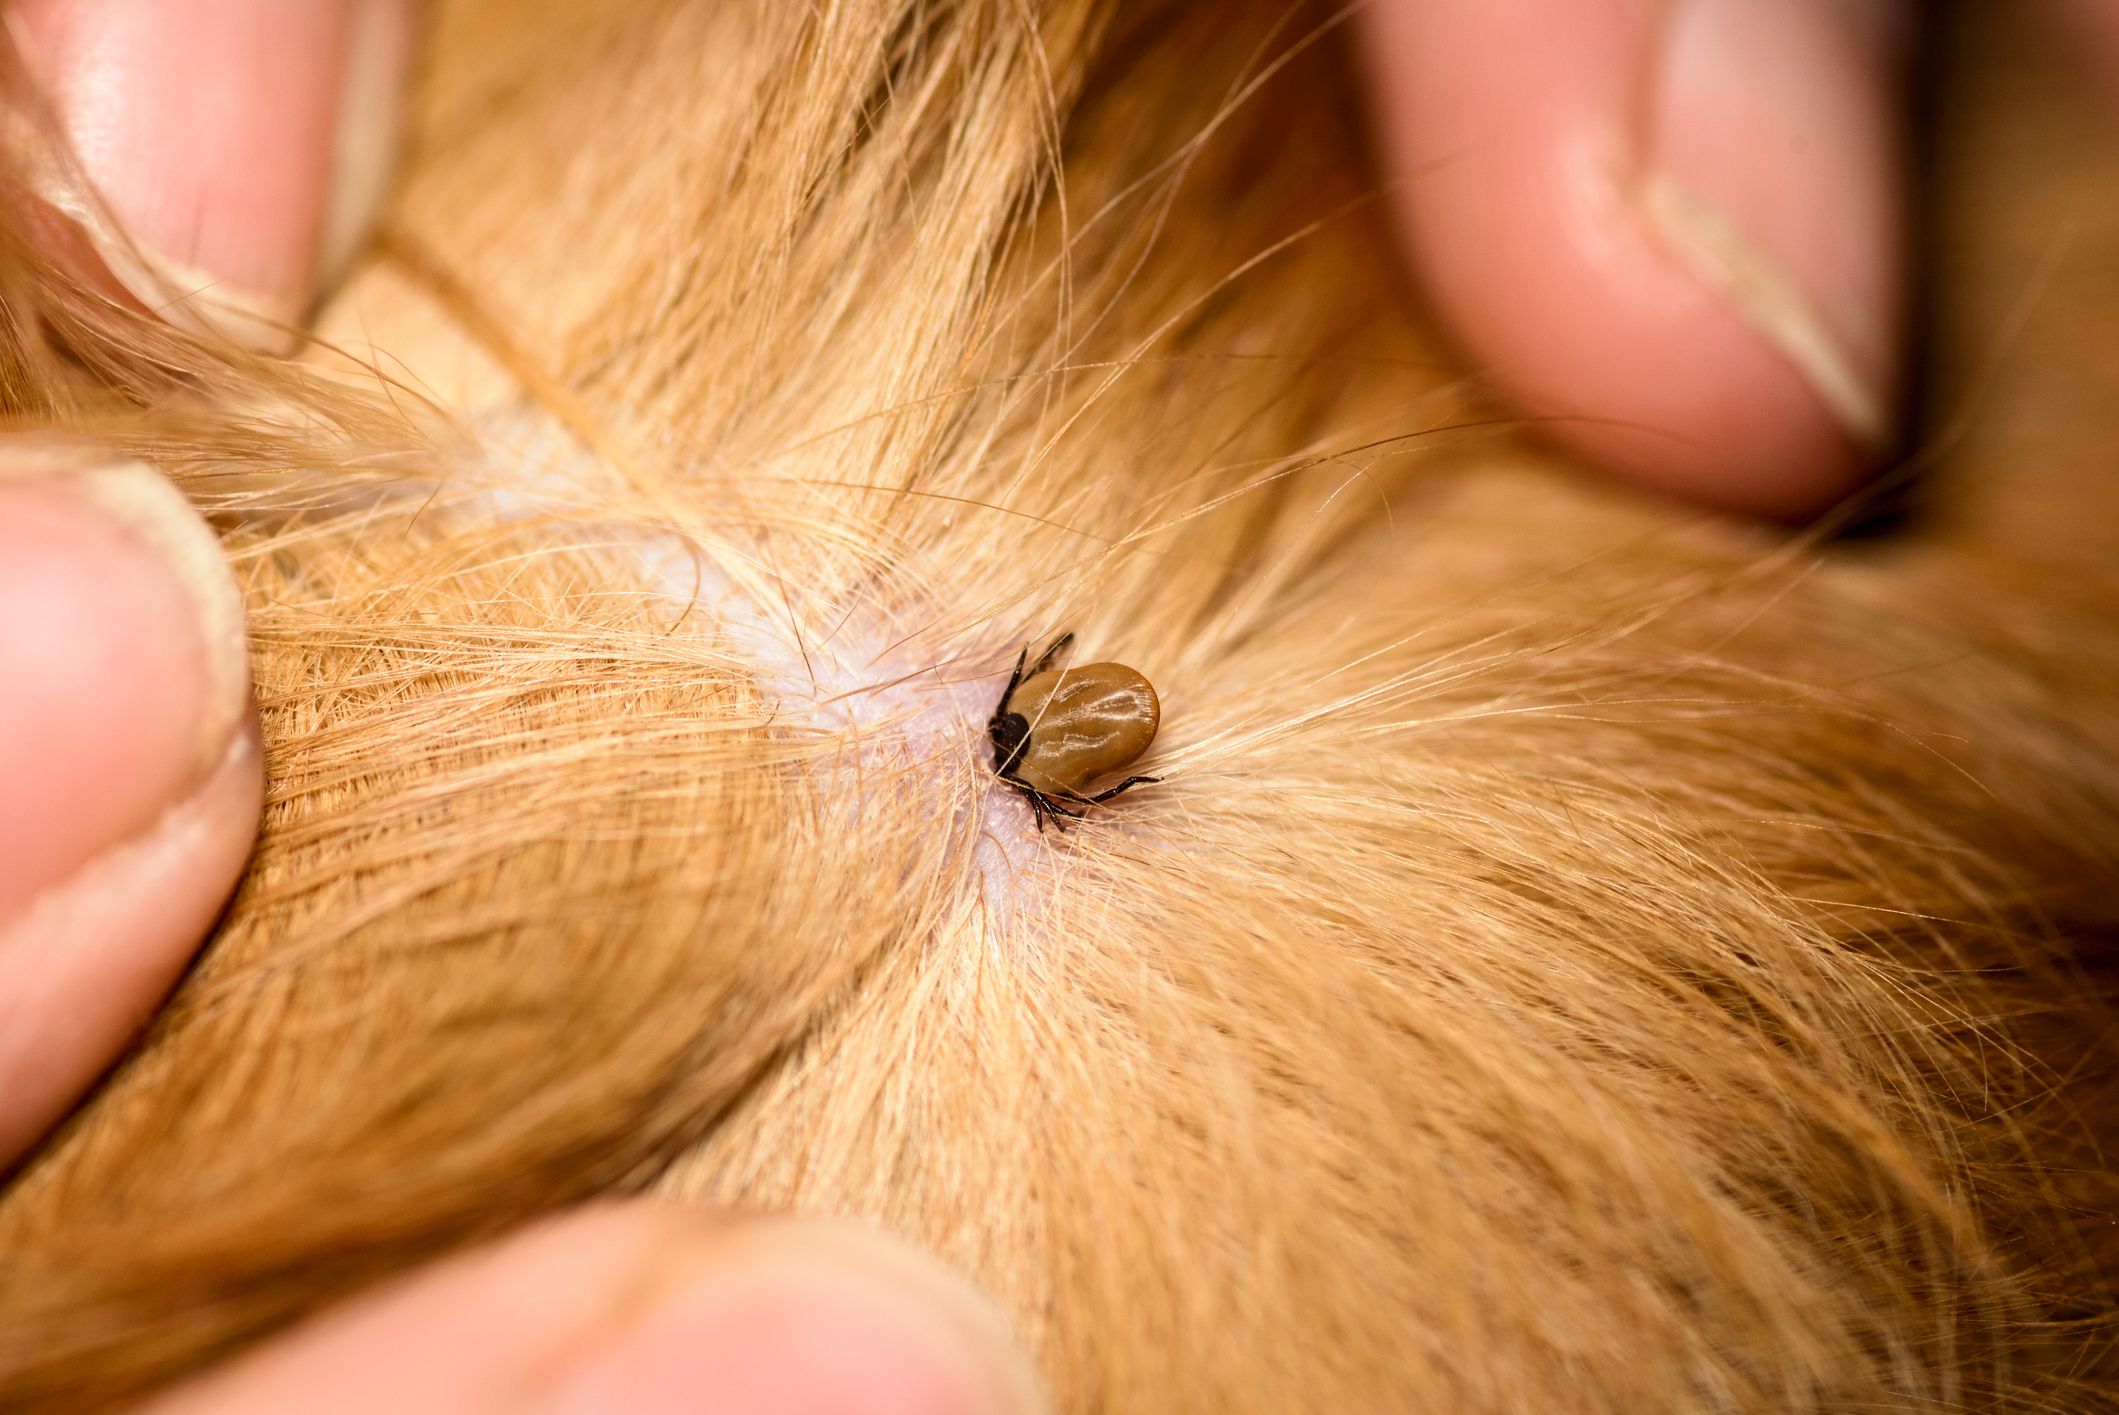 how do i know if my dog has demodex mites